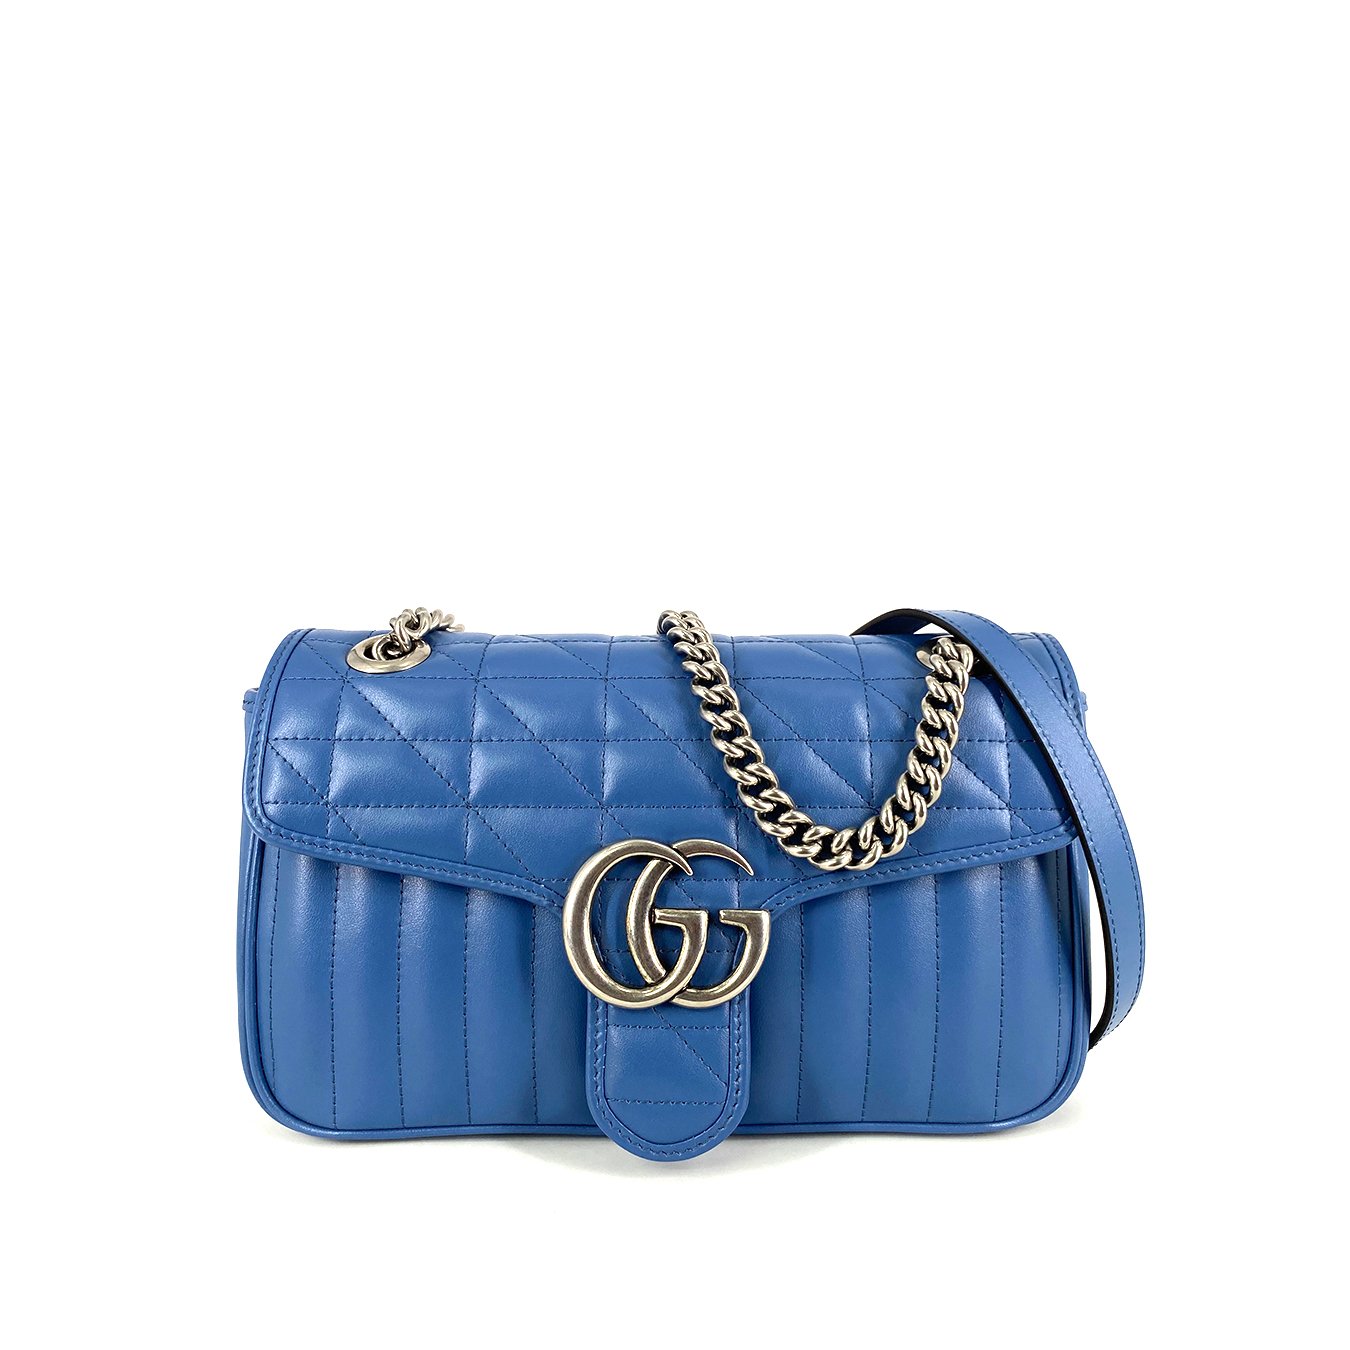 Gucci GG Marmont Matelassé Flap Leather Small Blue